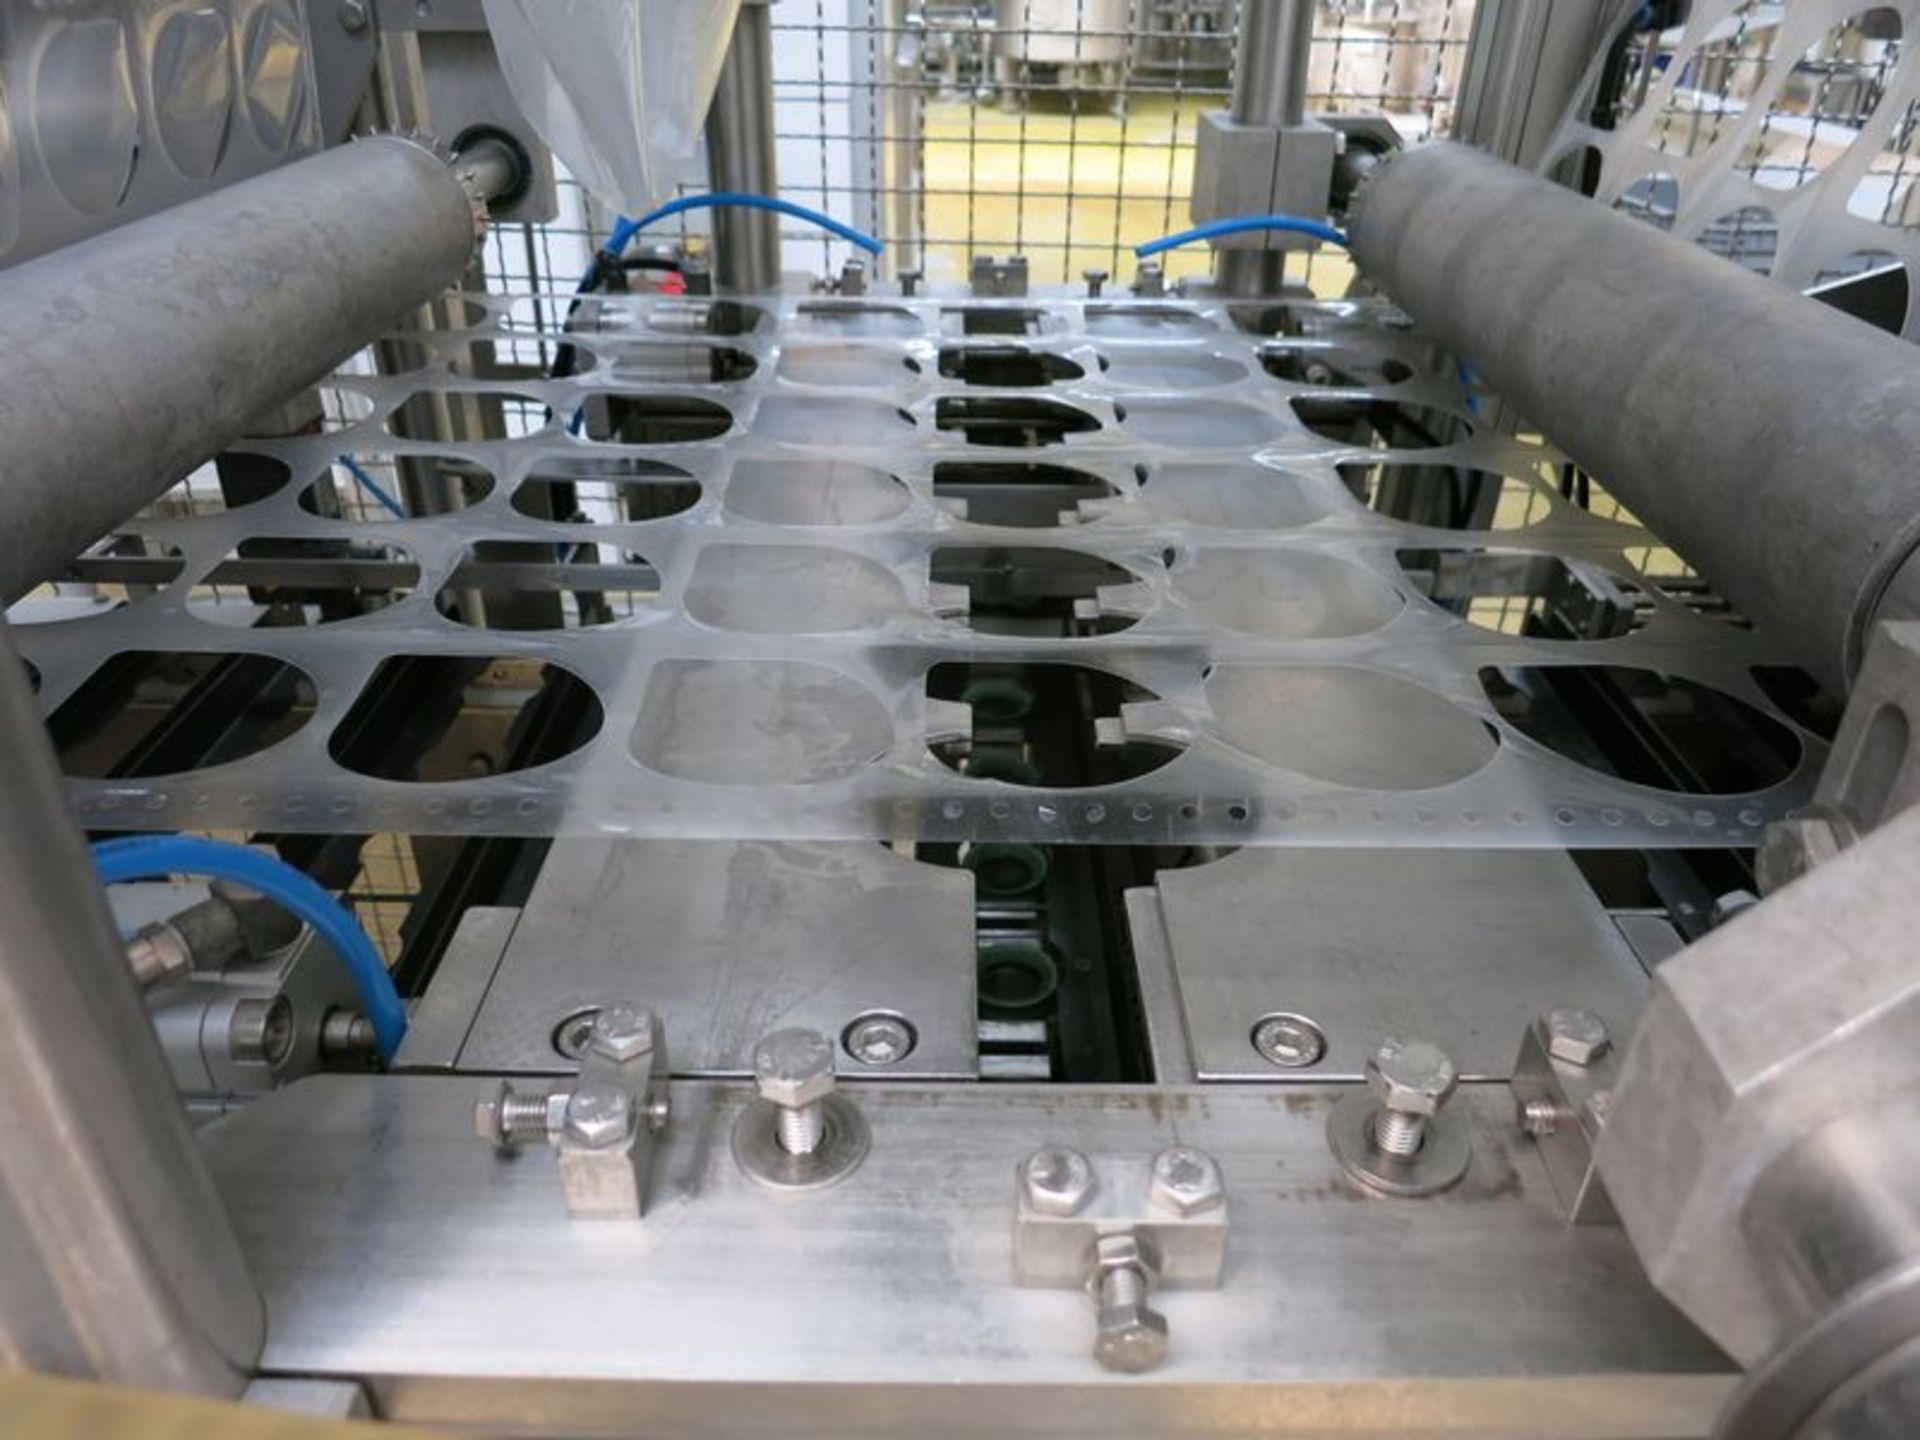 Lieder lid sealing machine, model TA-66-V, s/n 61190, 6 head sealing unit, with Siemens Simatic - Image 2 of 6